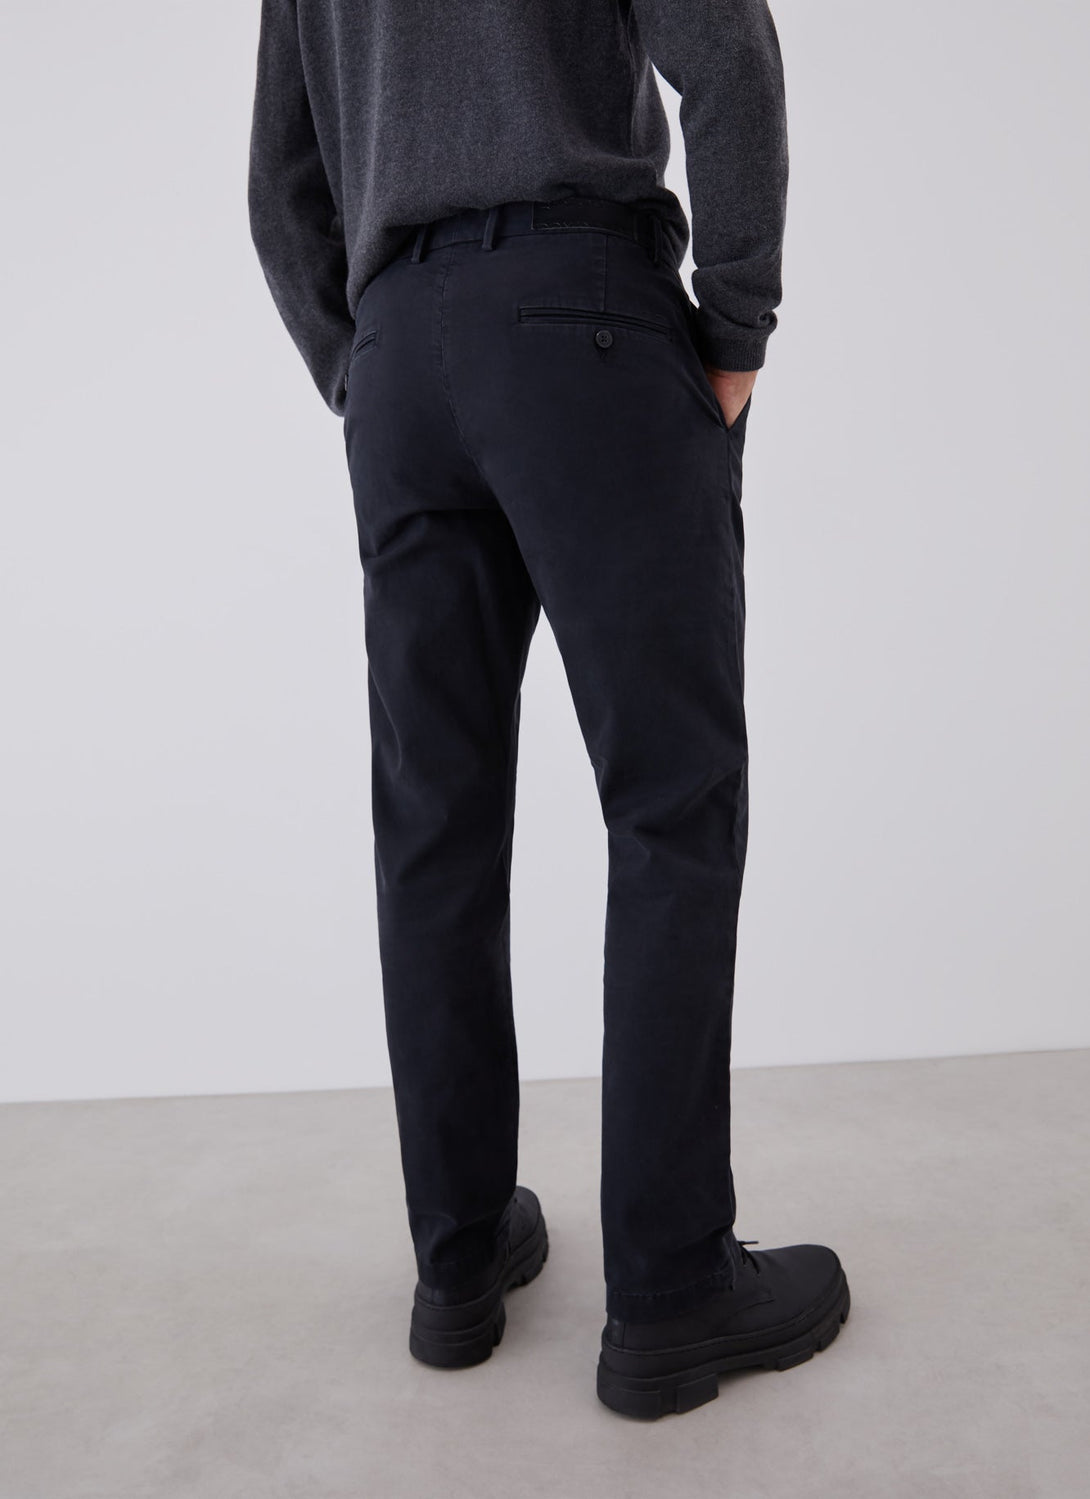 Men Trousers | Black Elastic Cotton Chino Trousers by Spanish designer Adolfo Dominguez